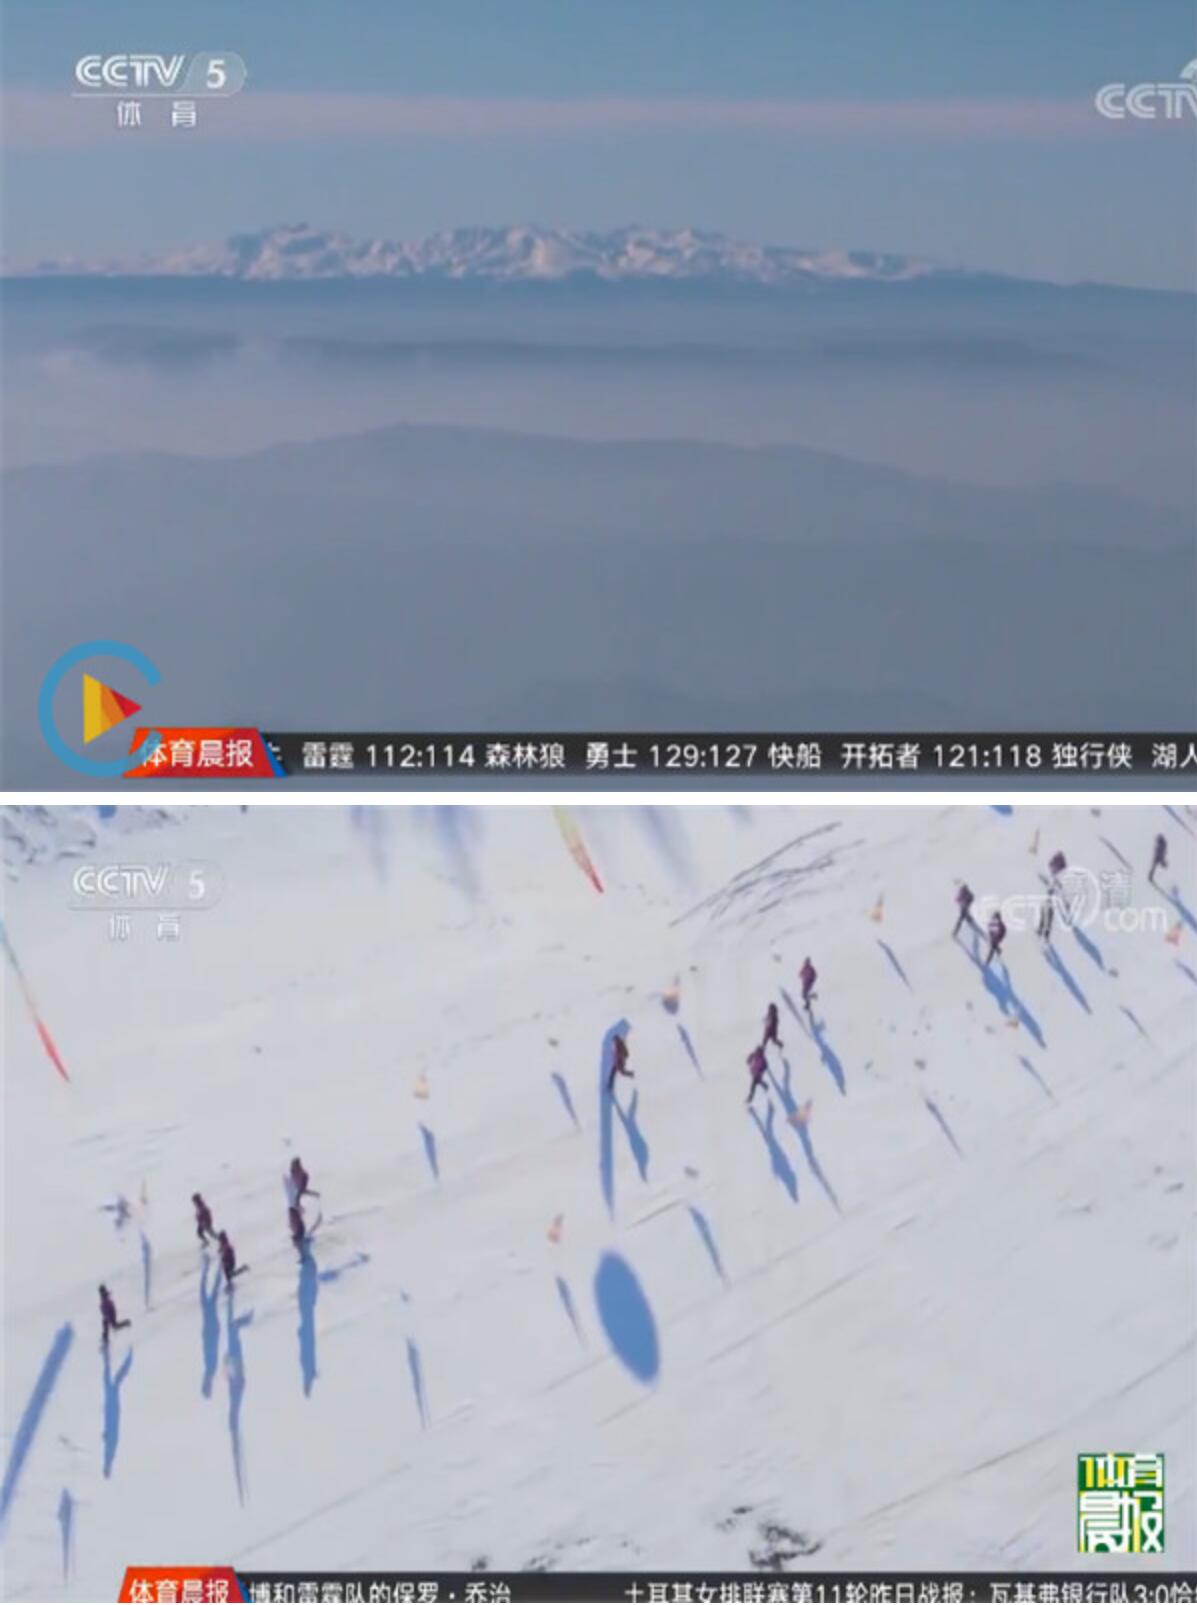 CCTV-5新闻报道植入-享受冰雪之乐和龙市冰钓大赛